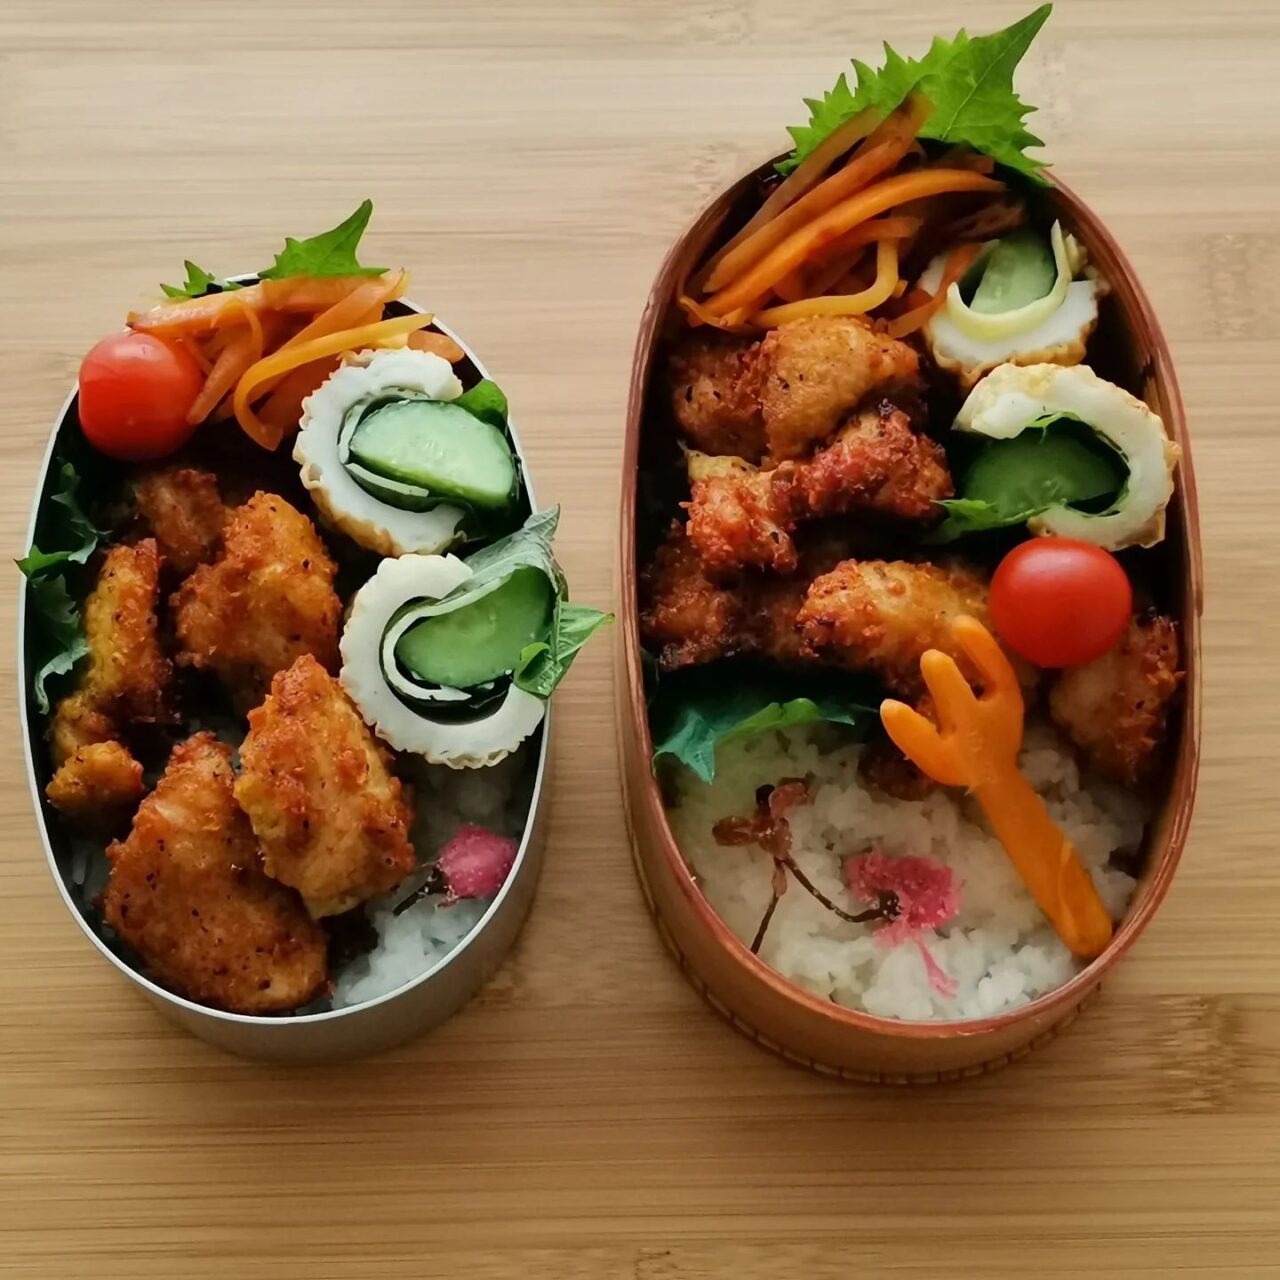 Hi there from Fukuoka Japan☀
2022/04/19
Fried chicken with curry flavour
Chikuwa tubular fish cake with cheese and cucumber
Stir-fry carrot 🥕
日々、自分なりに、小さな挑戦
ひとつ工夫やtipsを手に入れると、惰性の買う習慣をサヨウナラーフォーエバーと手放せるのが爽快です。買わなくなったのは洗剤、ラップ、そして、うどん！
#戦争反対 #StopWar #お弁当記録 #お弁当づくり #WomenEmpowerment